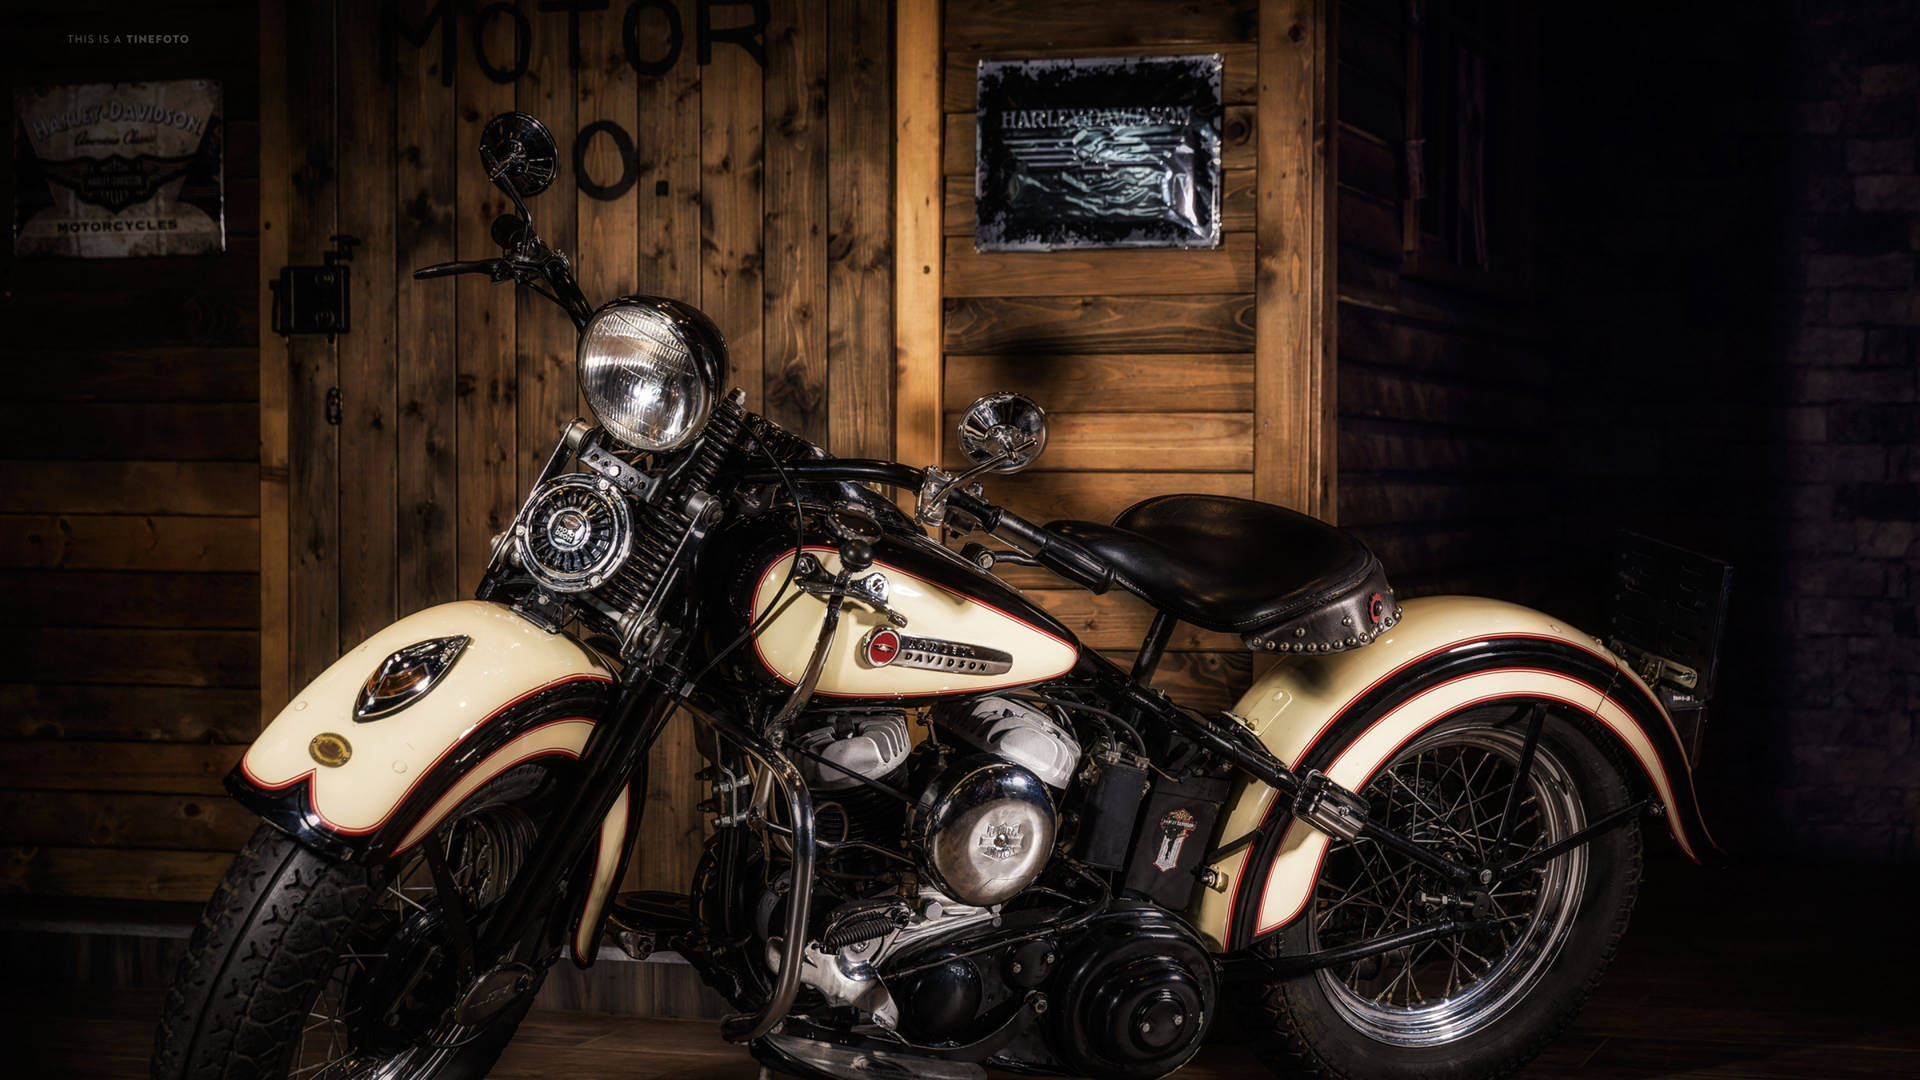 Off-white Harley Davidson Wallpaper